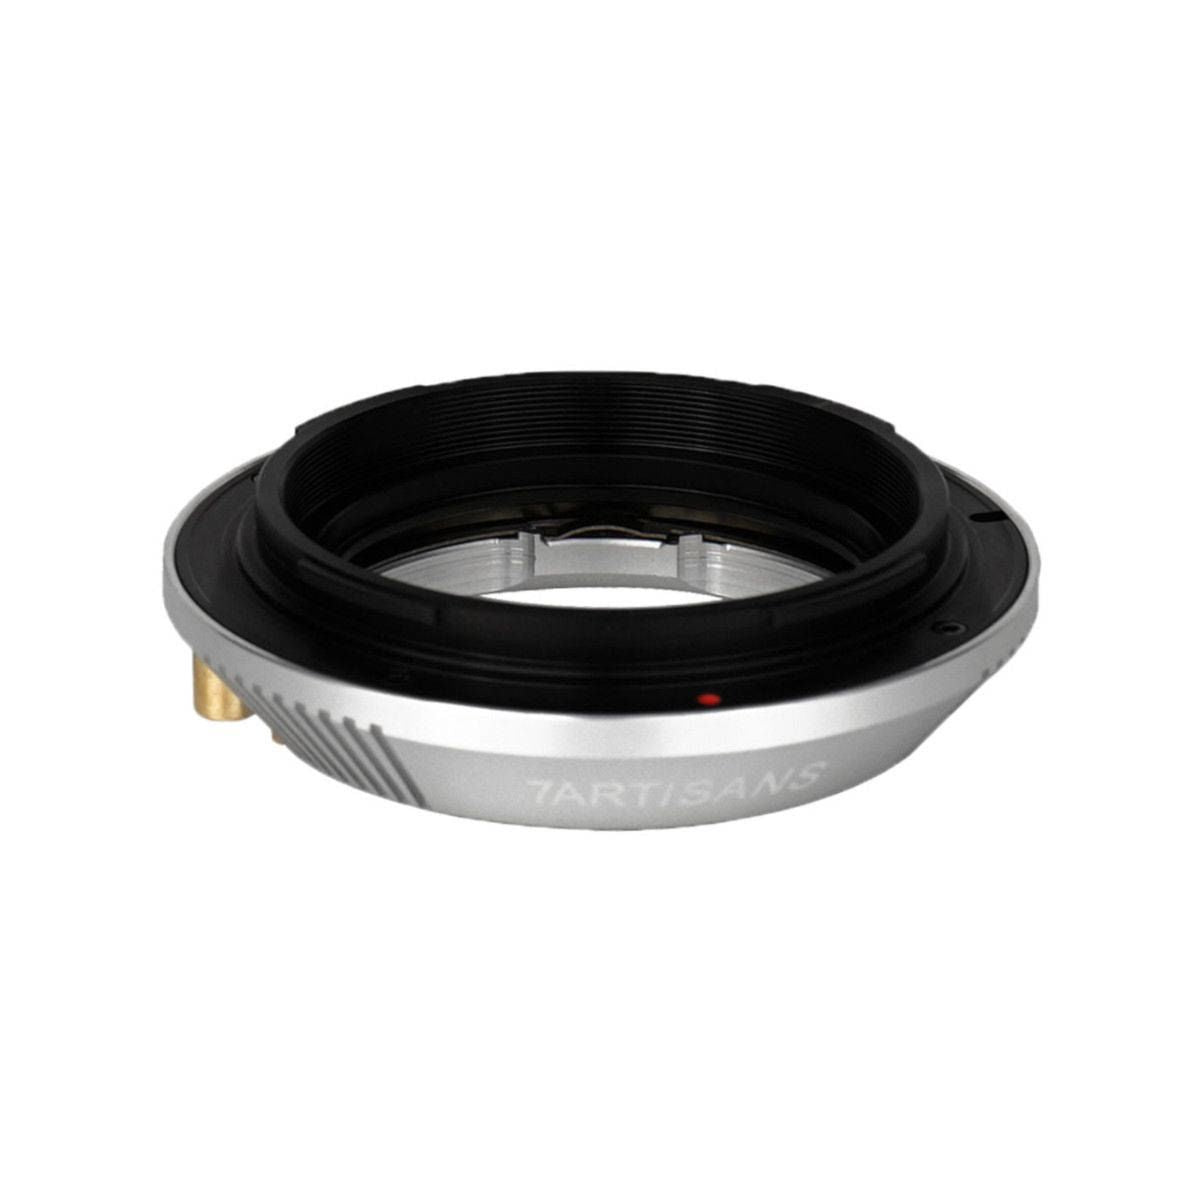 7artisans Transfer Ring For Leica M Mount Lens To Fujifilm X Mount Camera Silver